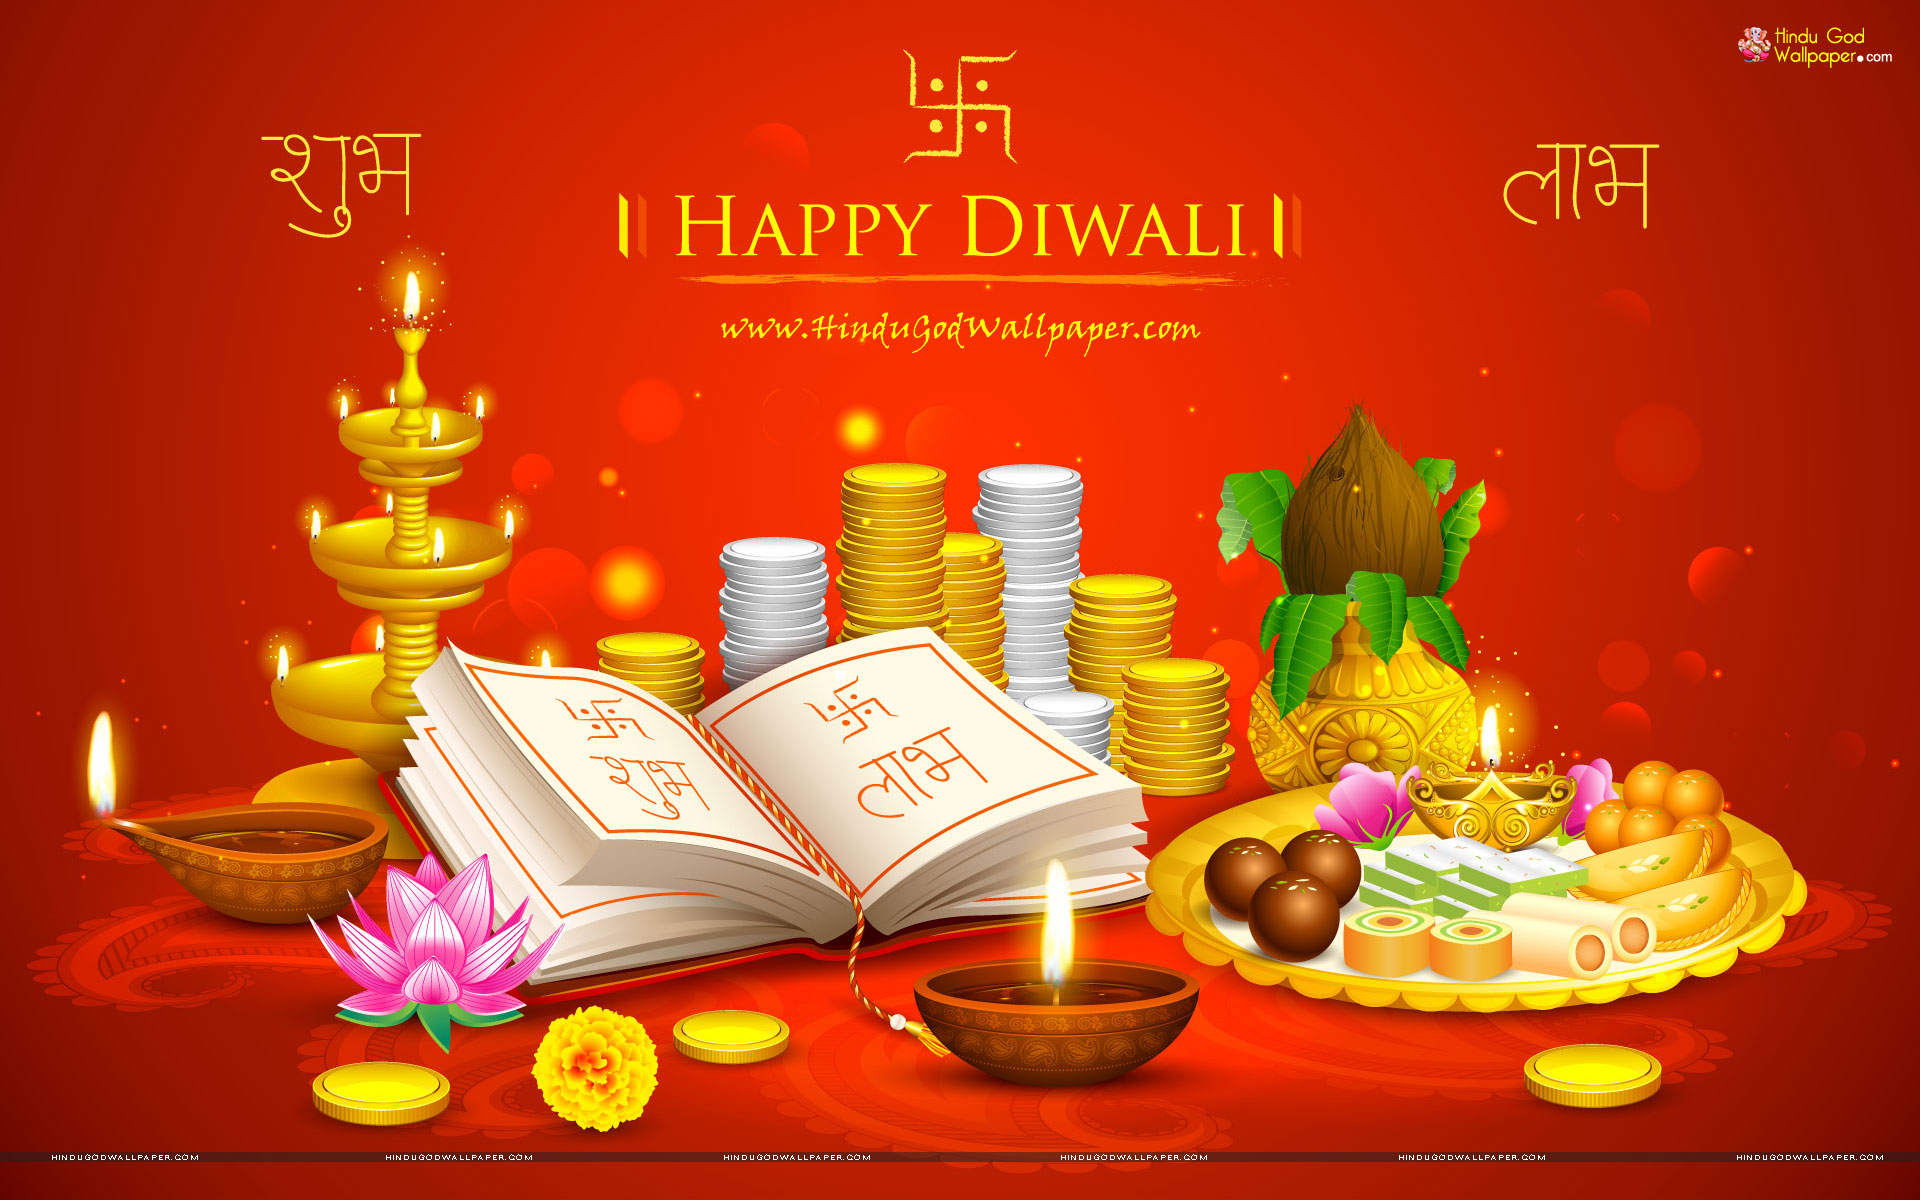 Diwali Background Wallpaper HD Free Download